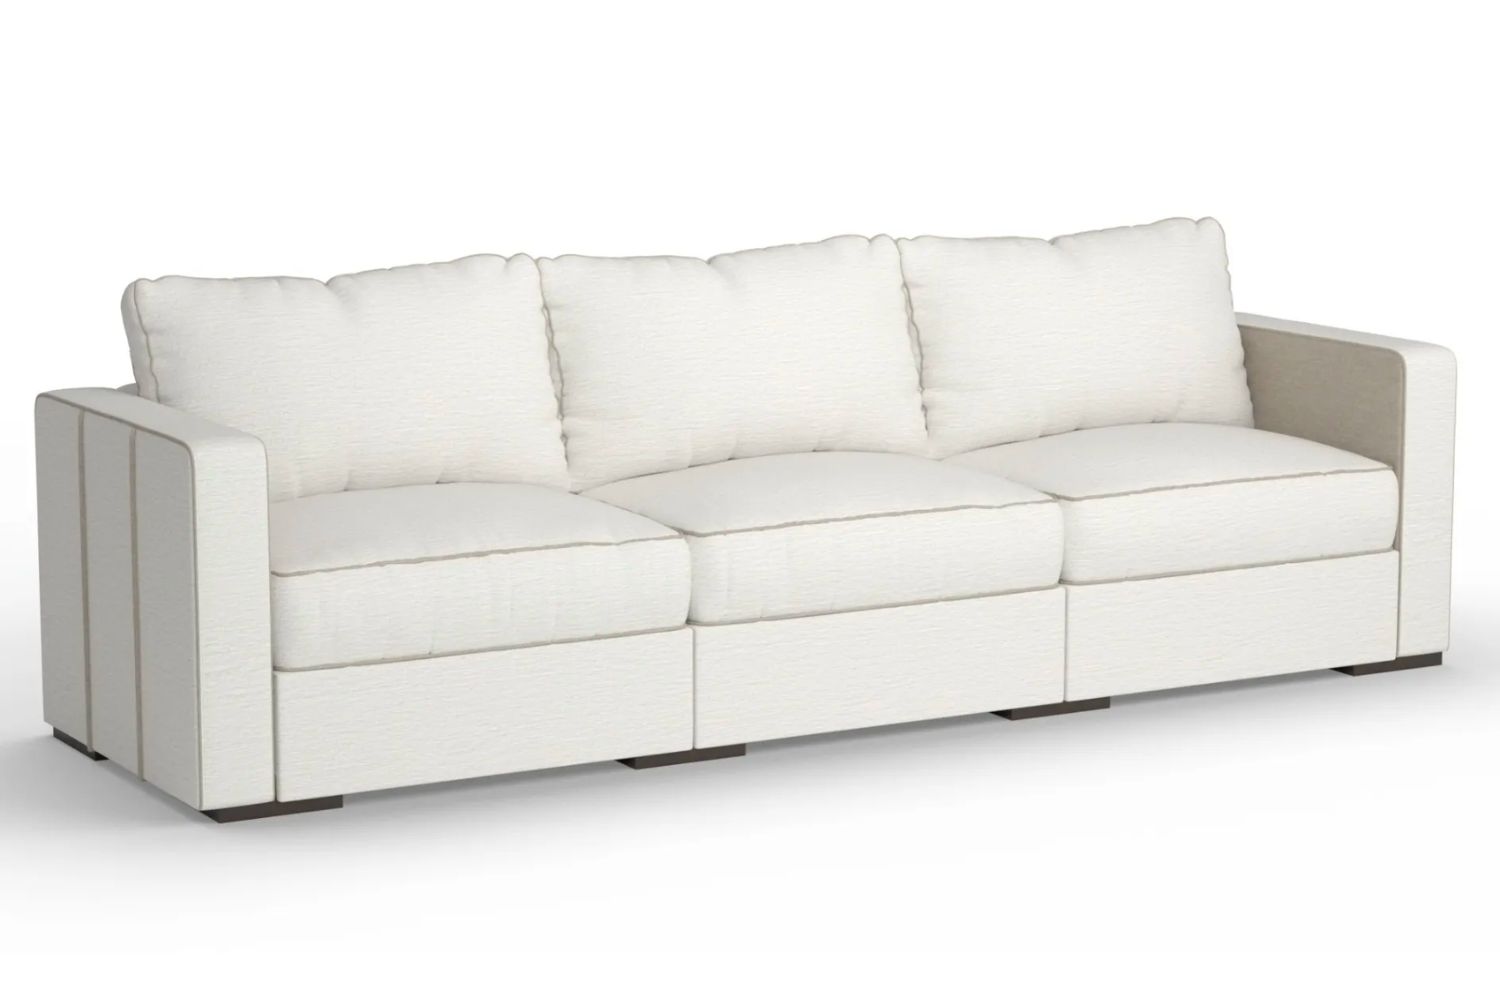 The Best Sofa Brands Option: Lovesac